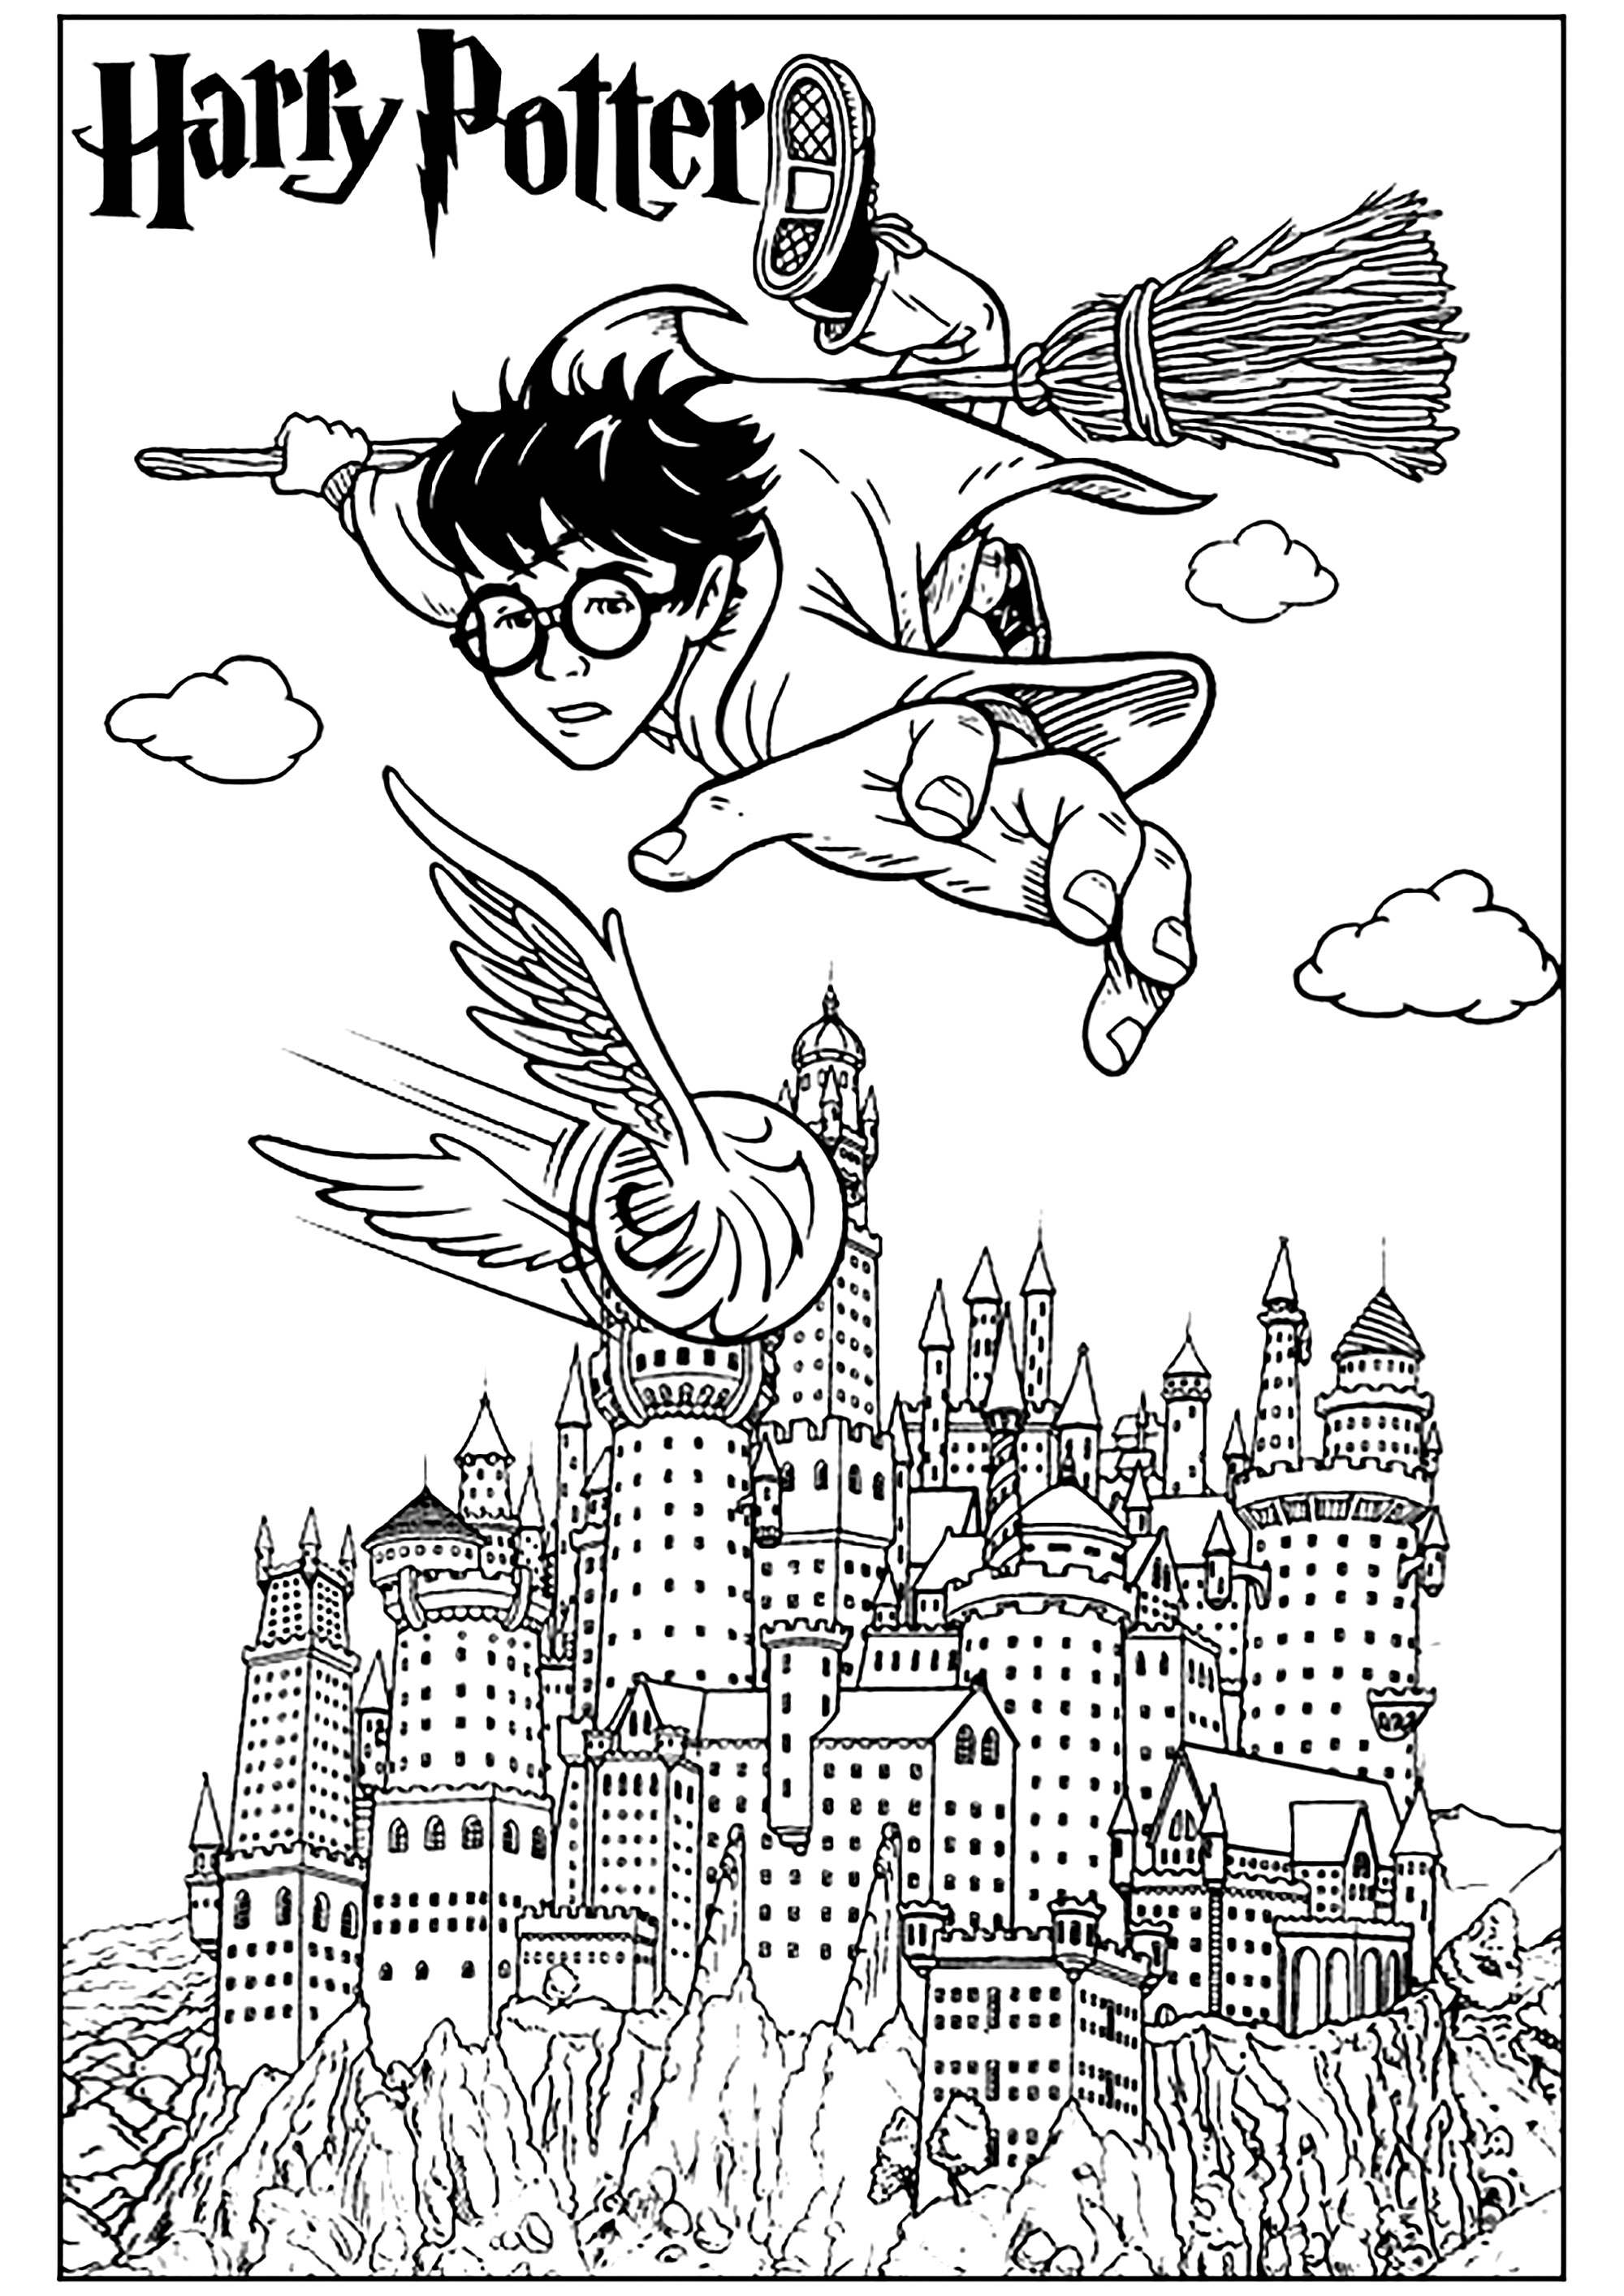 Harry Potter sobrevolando Hogwarts durante un partido de Quidditch